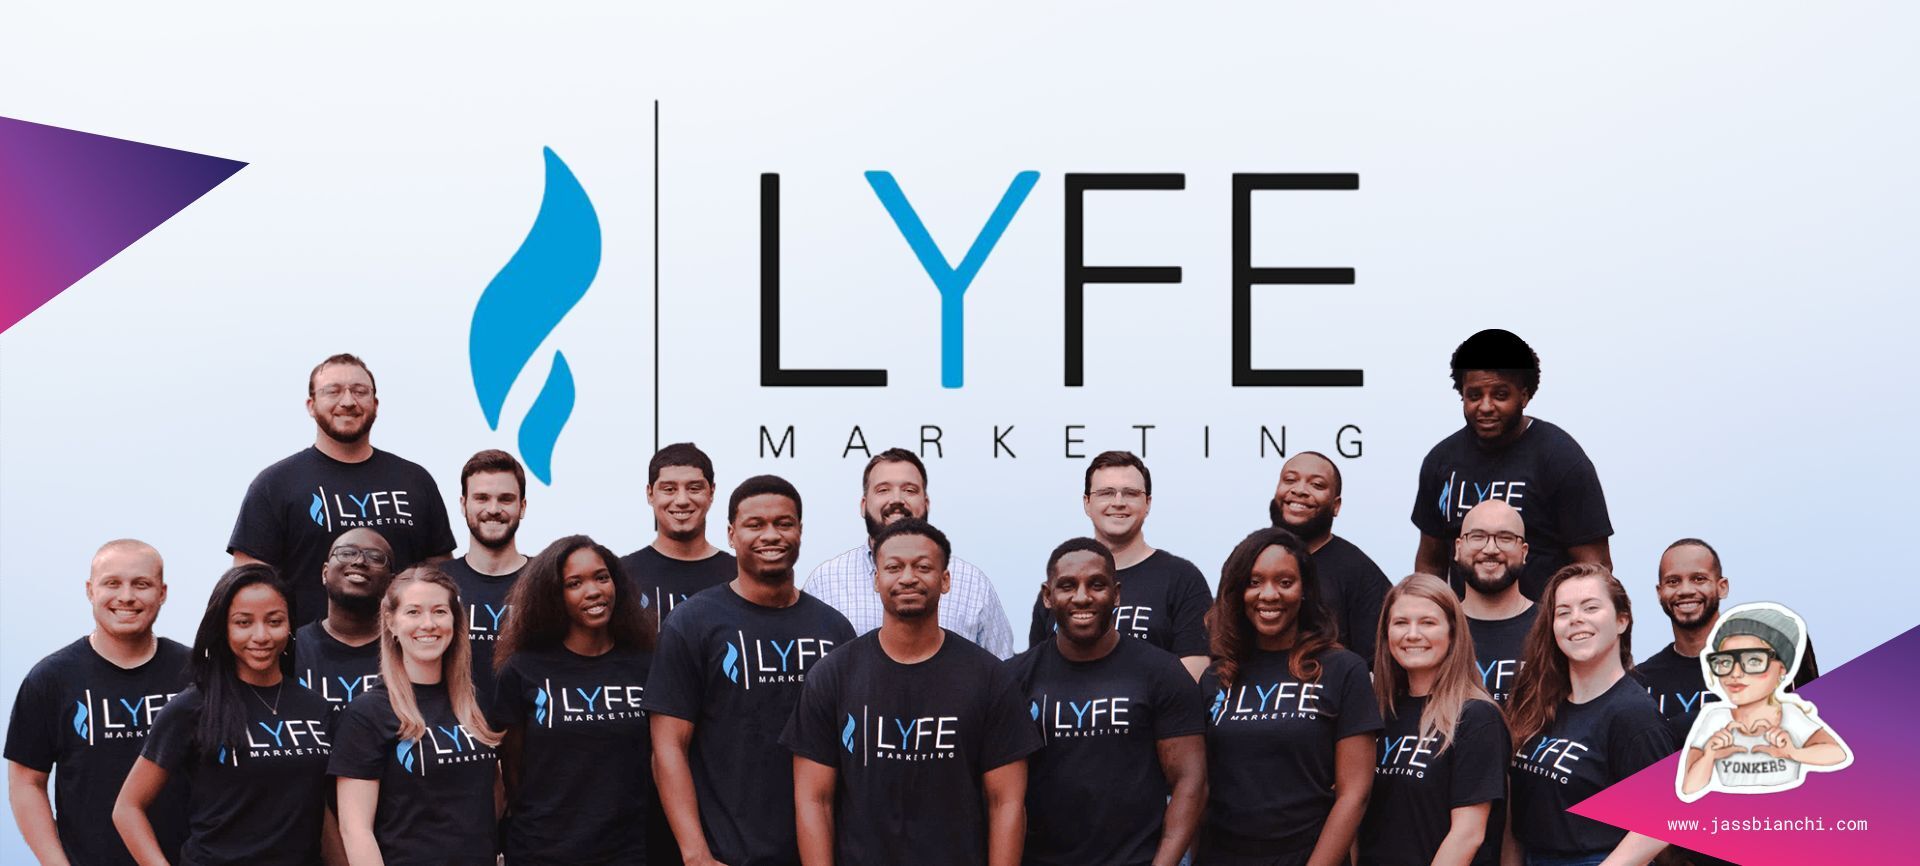 Lyfe Marketing is a social media agency